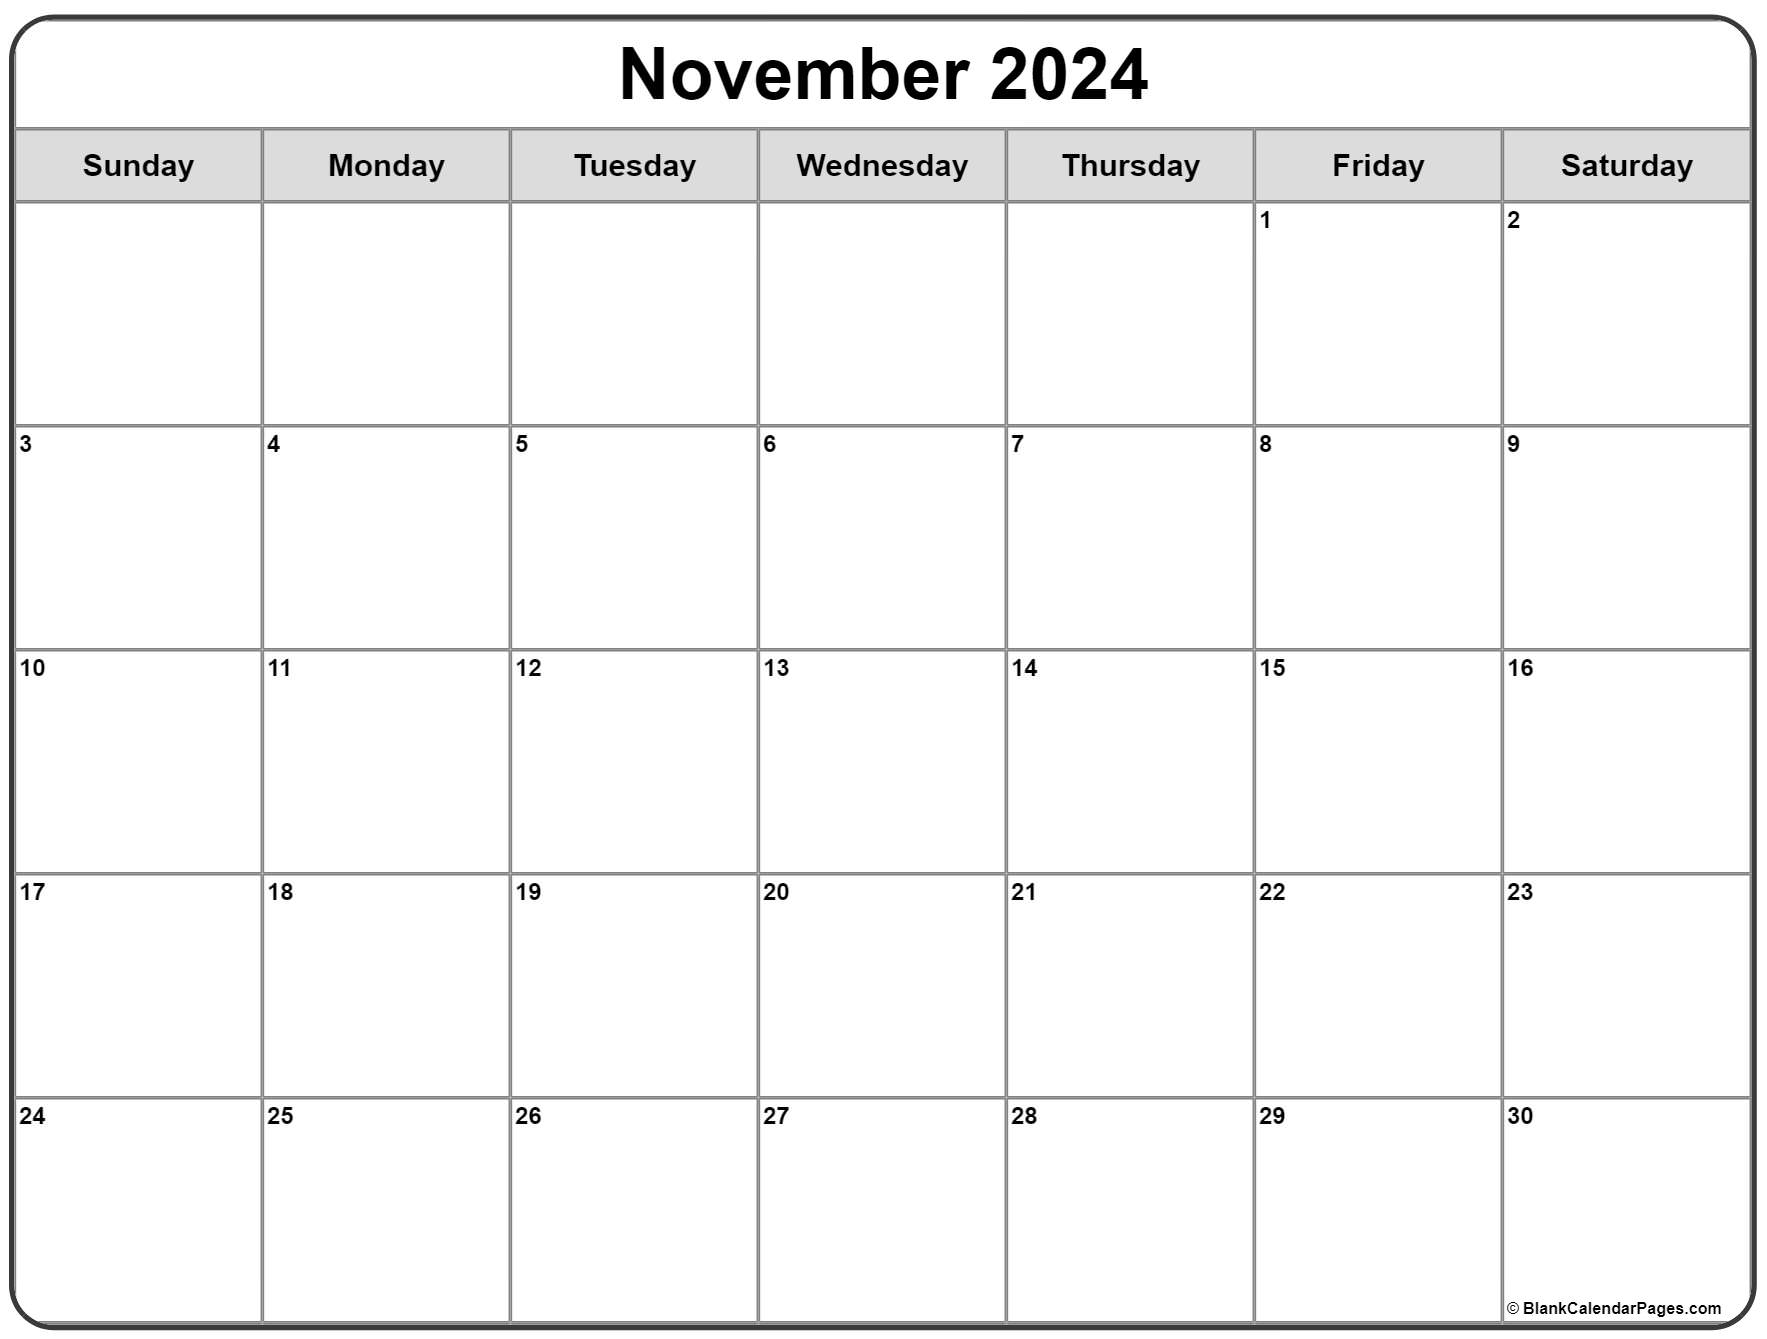 Free Printable Calendar November 2022 November 2022 Calendar | Free Printable Calendar Templates